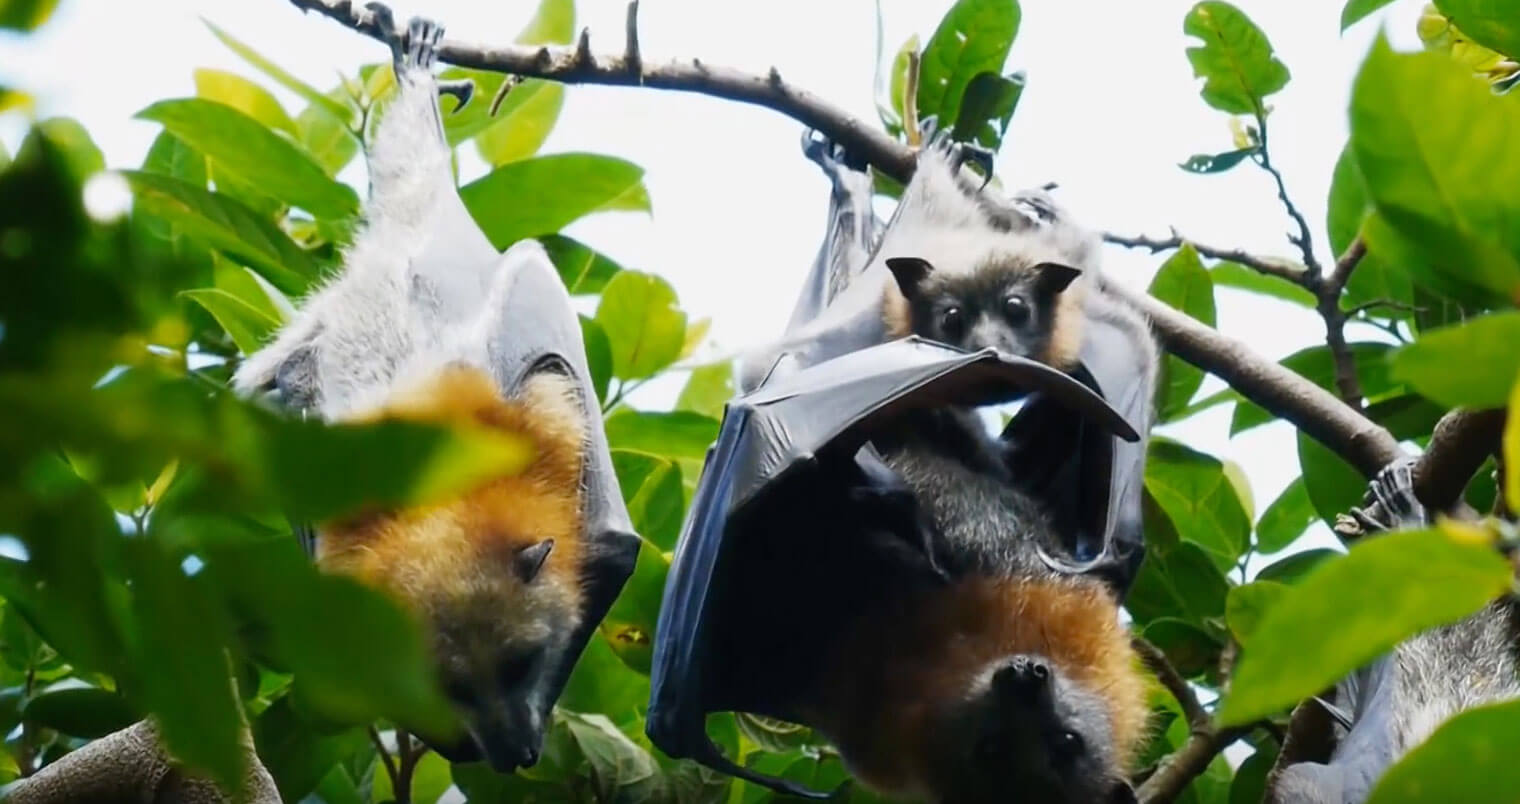 BACARDÍ Installs Bat Caves at Bottling Plant to Save Bats, featured image